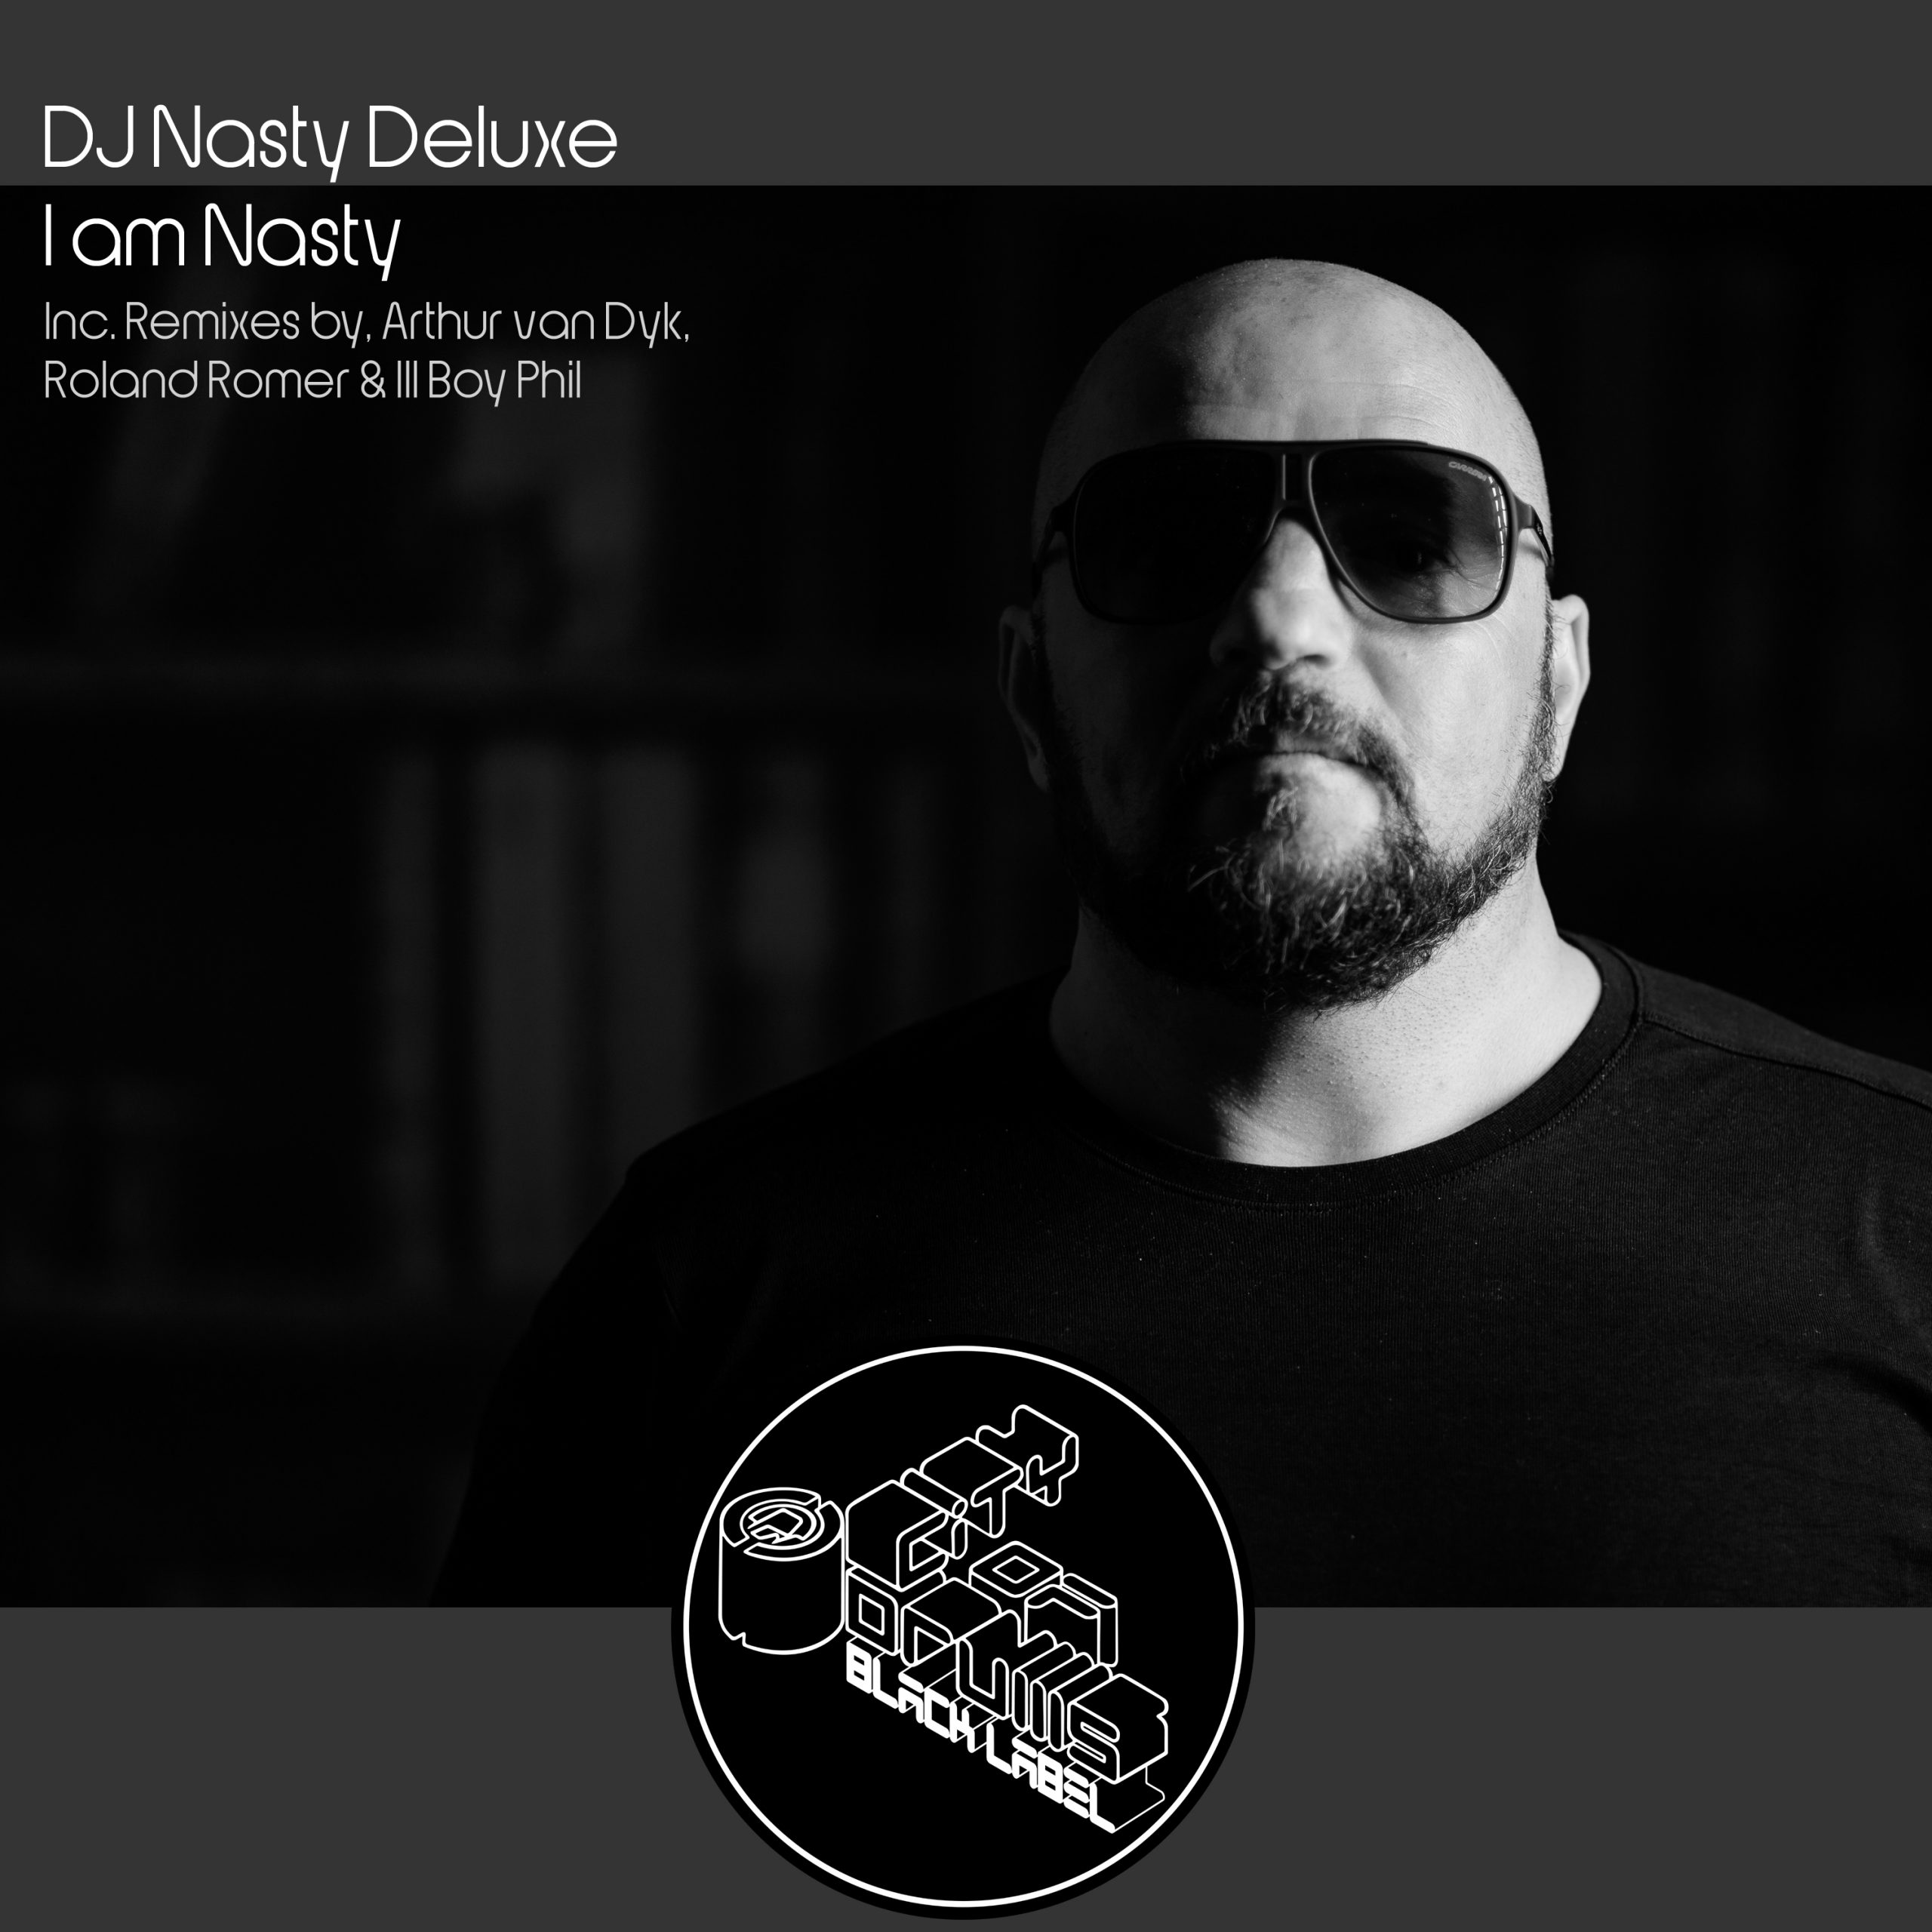 OUT NOW!!! I am Nasty von DJ Nasty Deluxe! 11